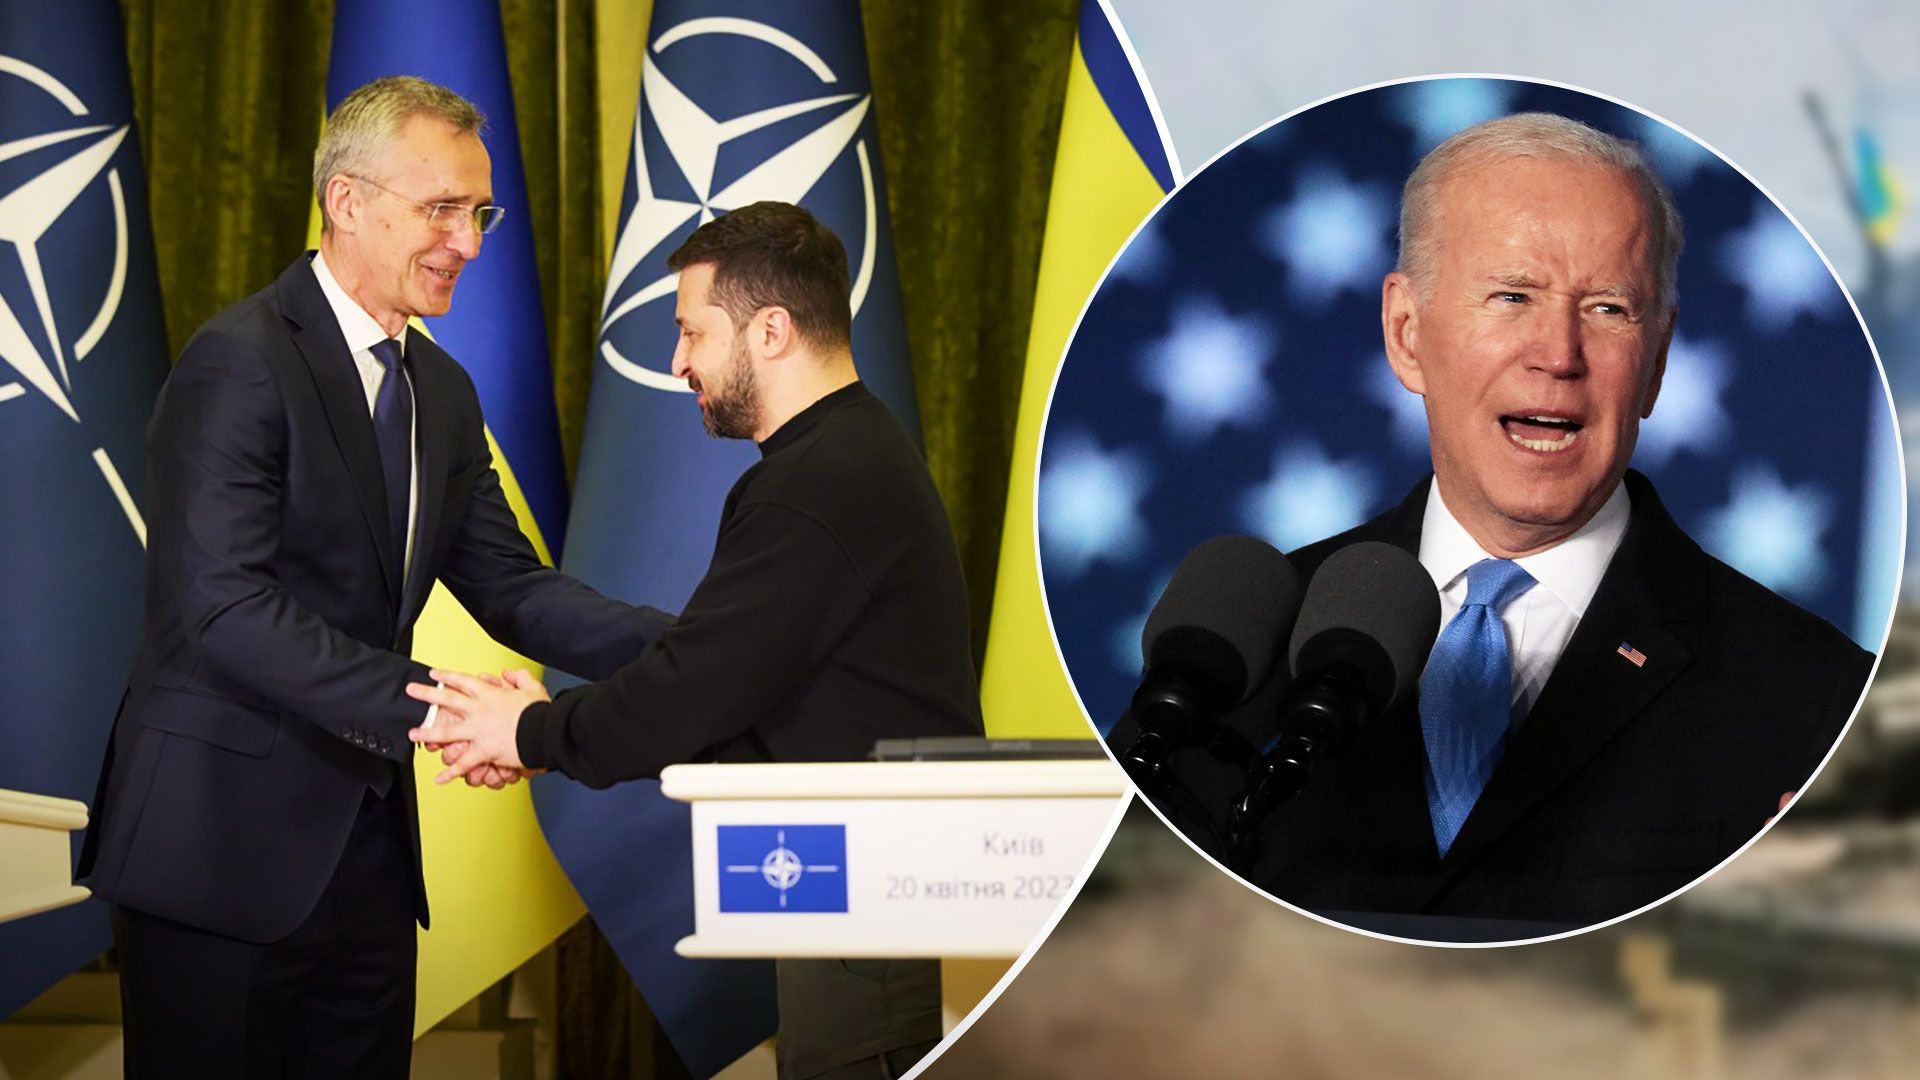 Присоединится ли Украина к НАТО - что будет на саммите НАТО - 24 Канал